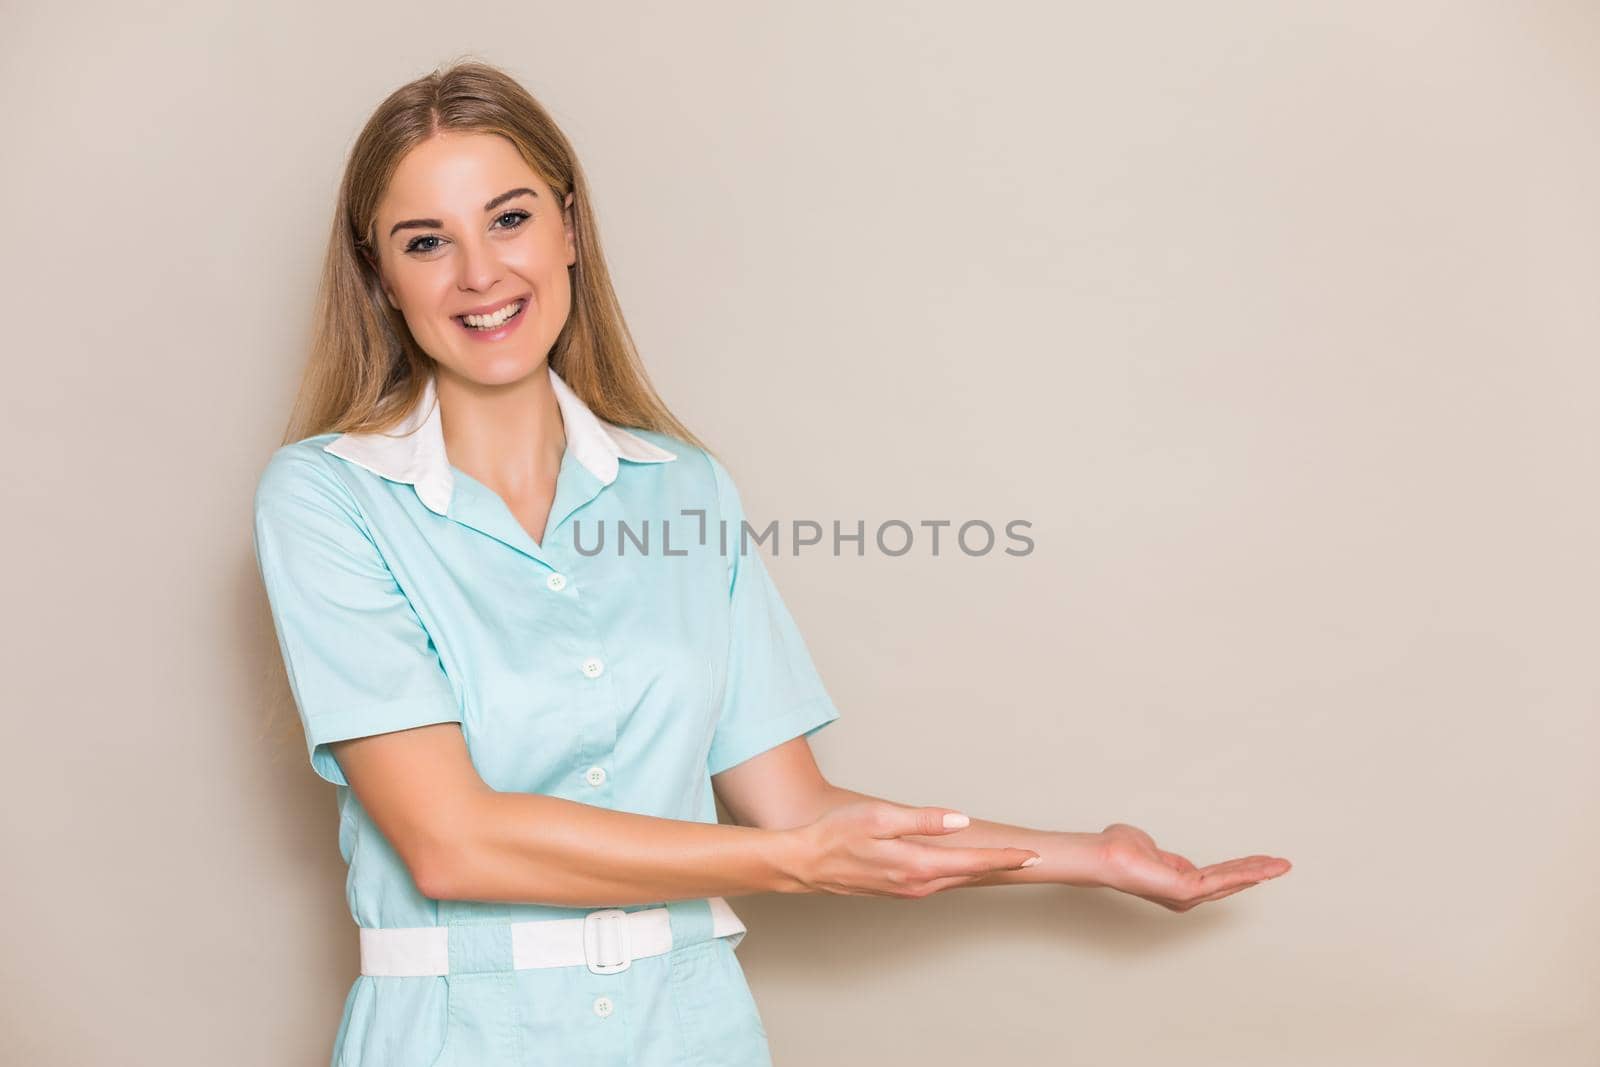 Image of medical nurse showing welcome gesture.